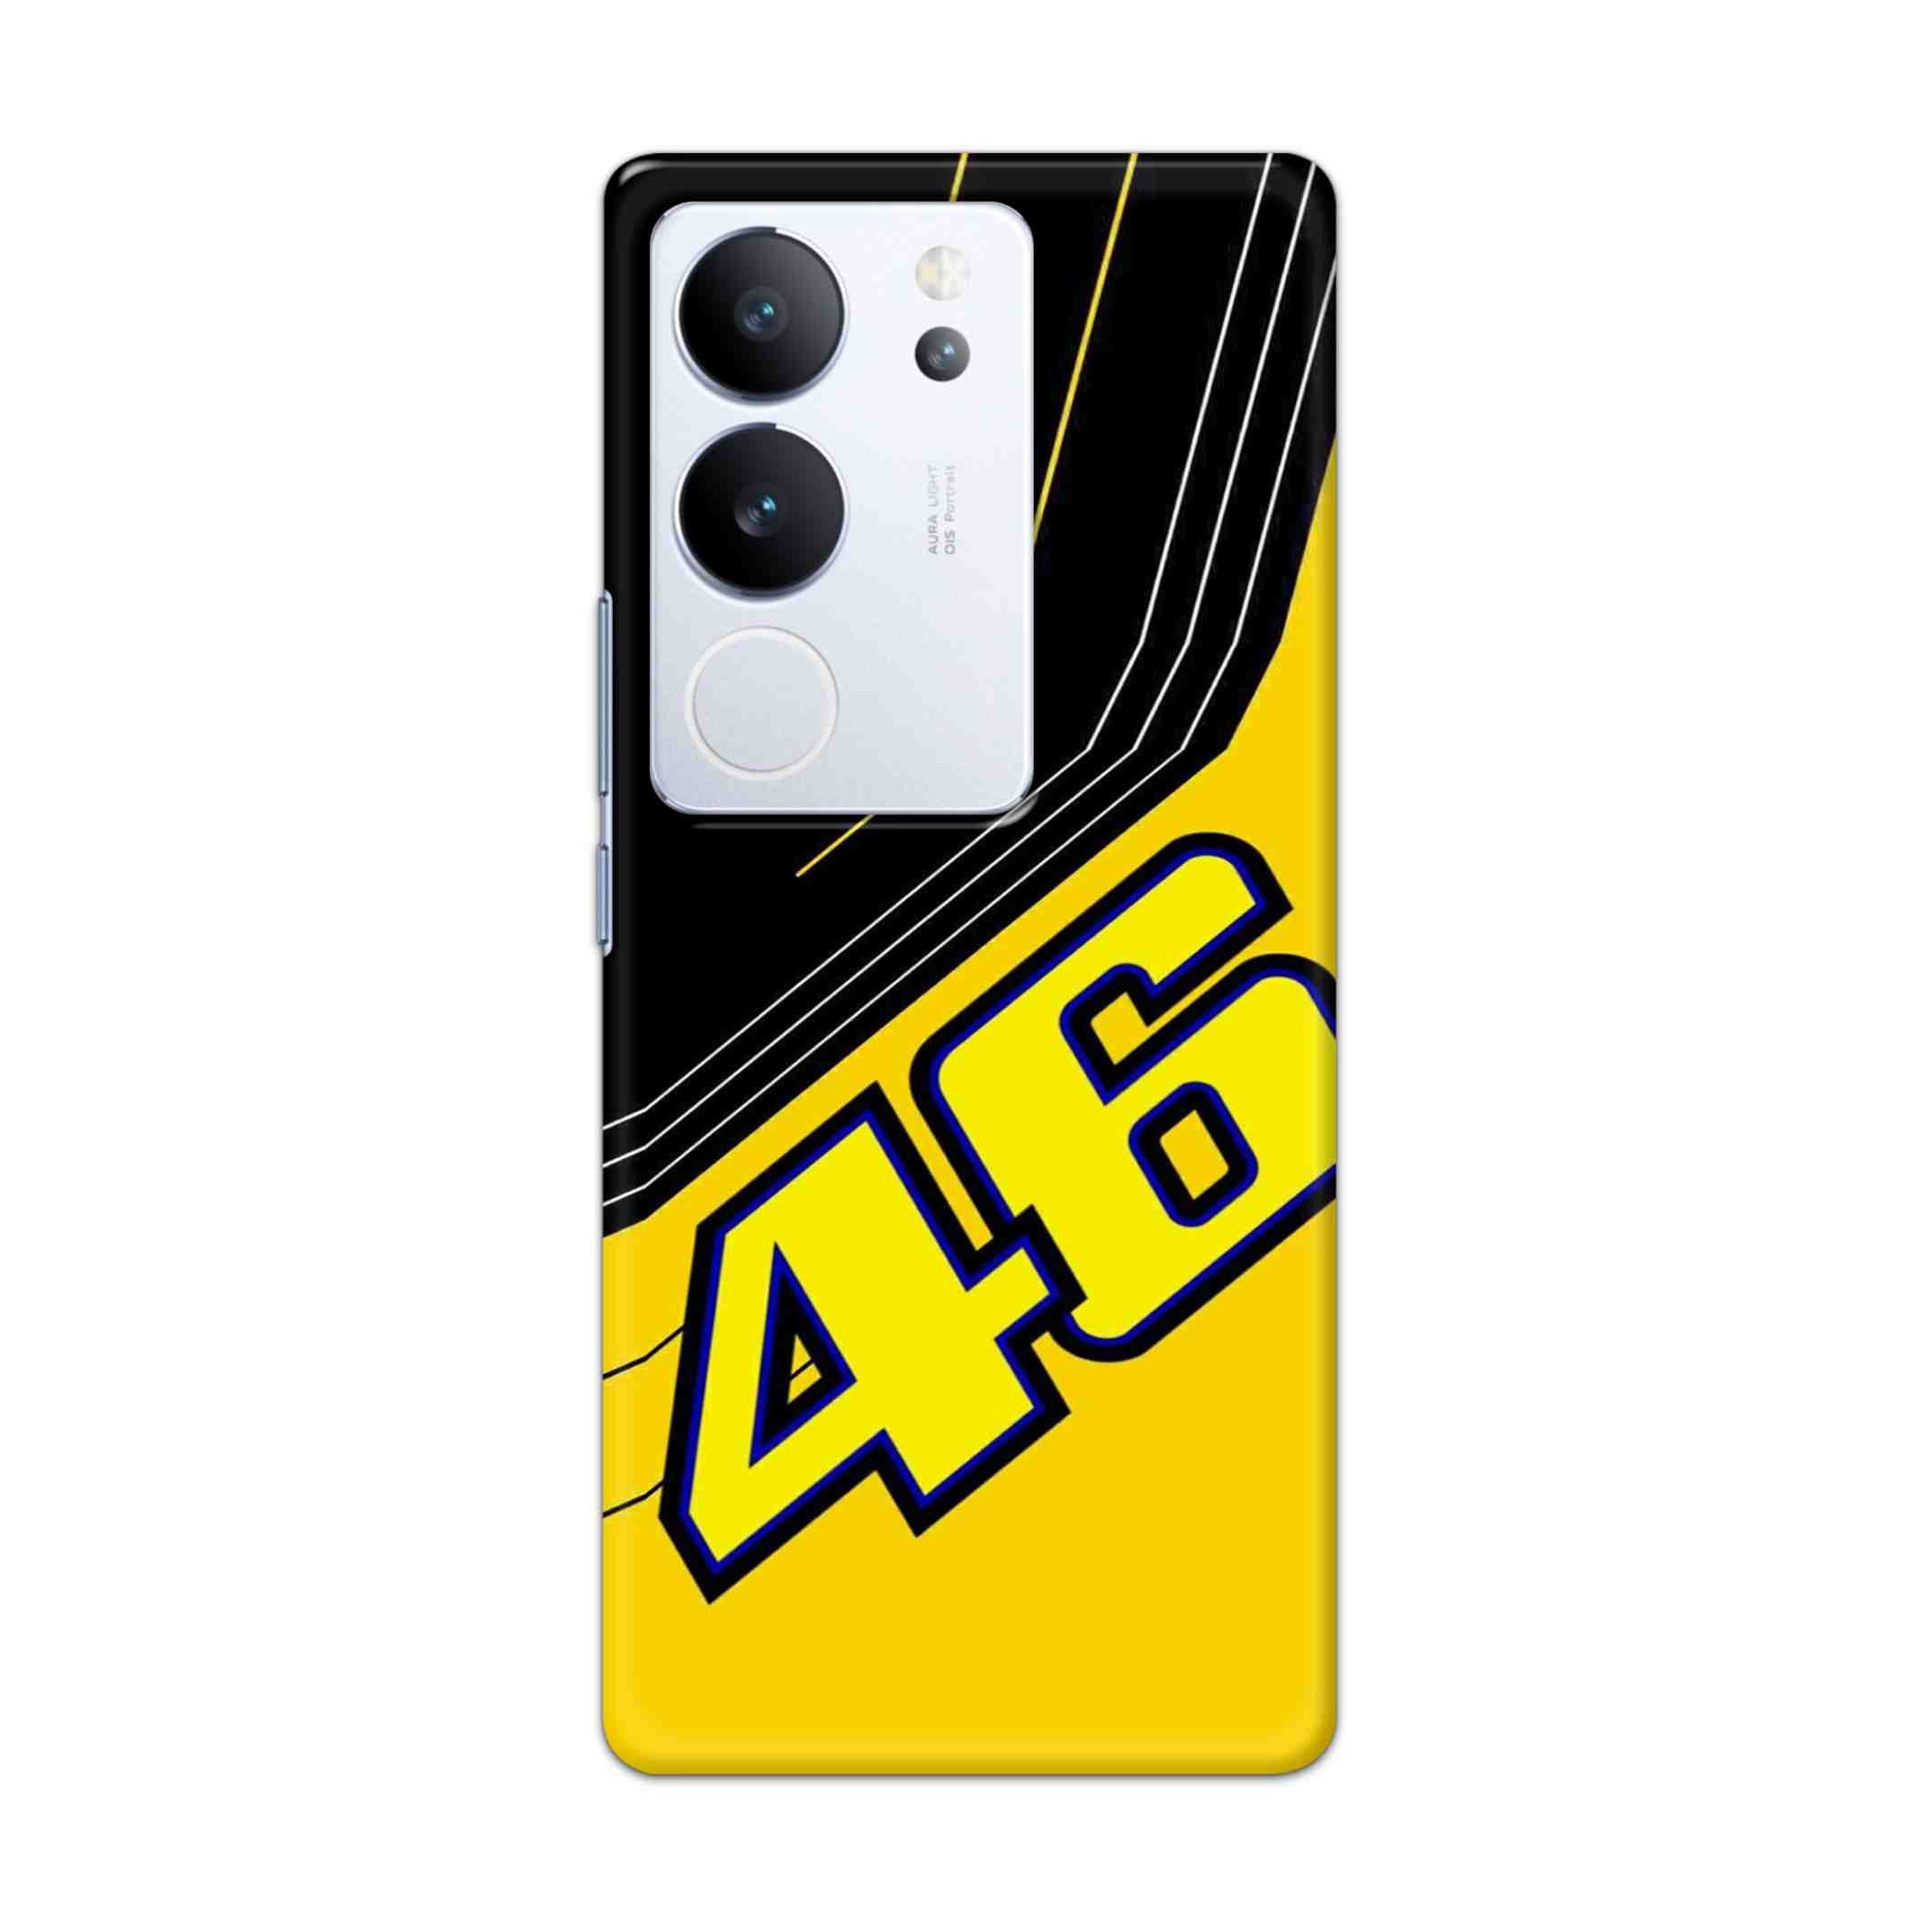 Buy 46 Hard Back Mobile Phone Case/Cover For Vivo V29 / V29 Pro Online